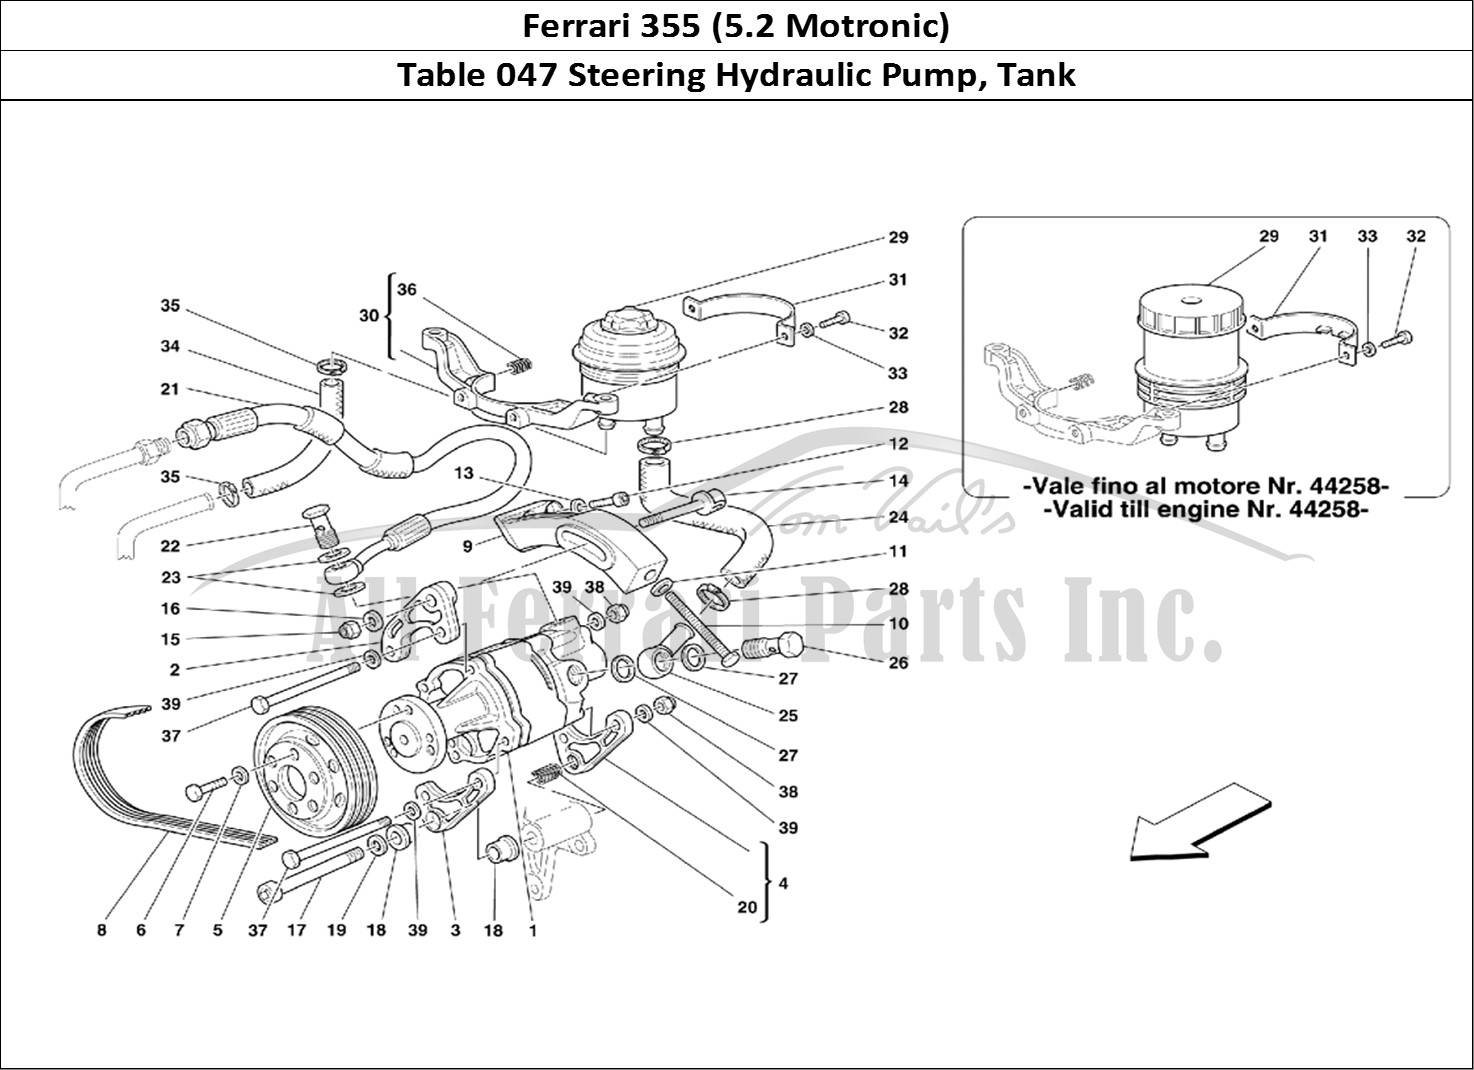 Ferrari Parts Ferrari 355 (5.2 Motronic) Page 047 Hydraulic Steering Pump a